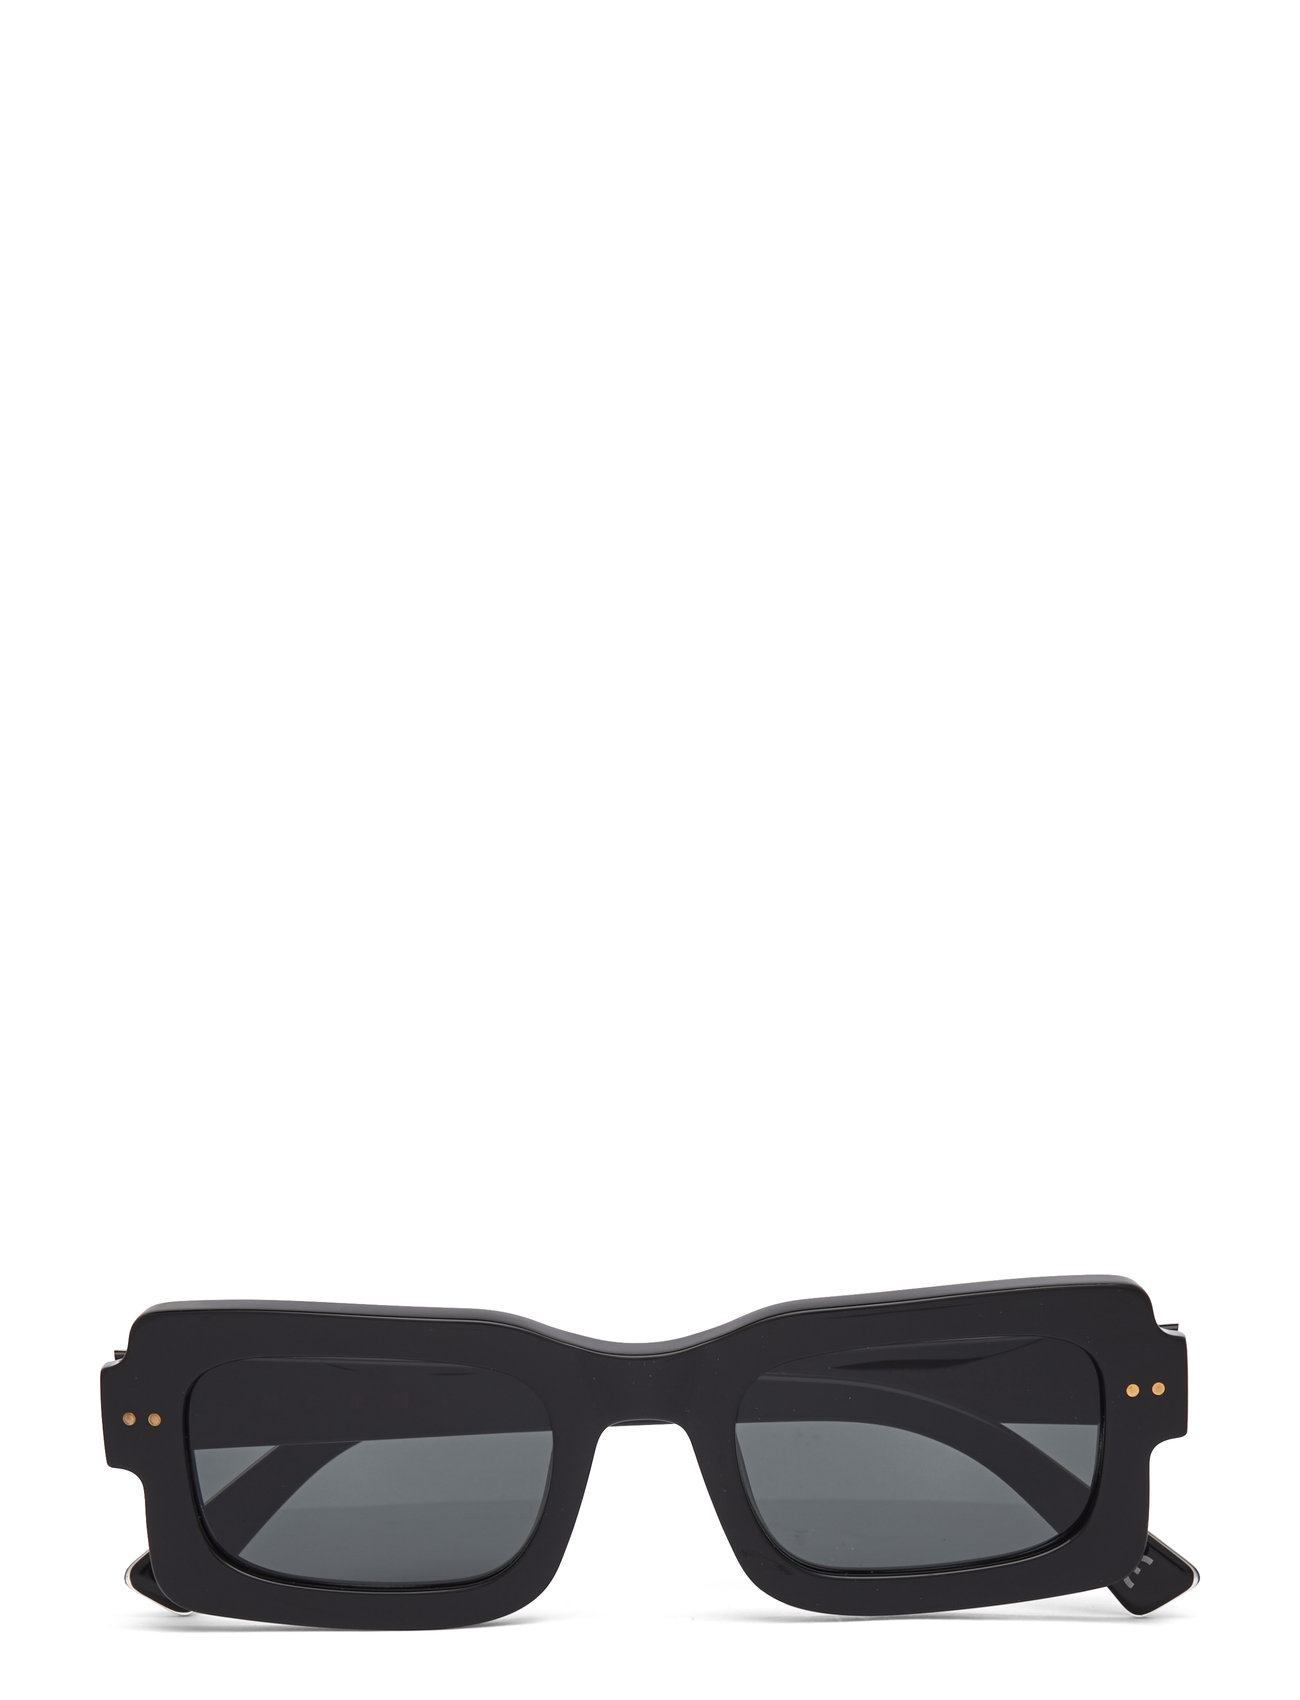 Lake Vostok Black Accessories Sunglasses D-frame- Wayfarer Sunglasses Black Marni Sunglasses